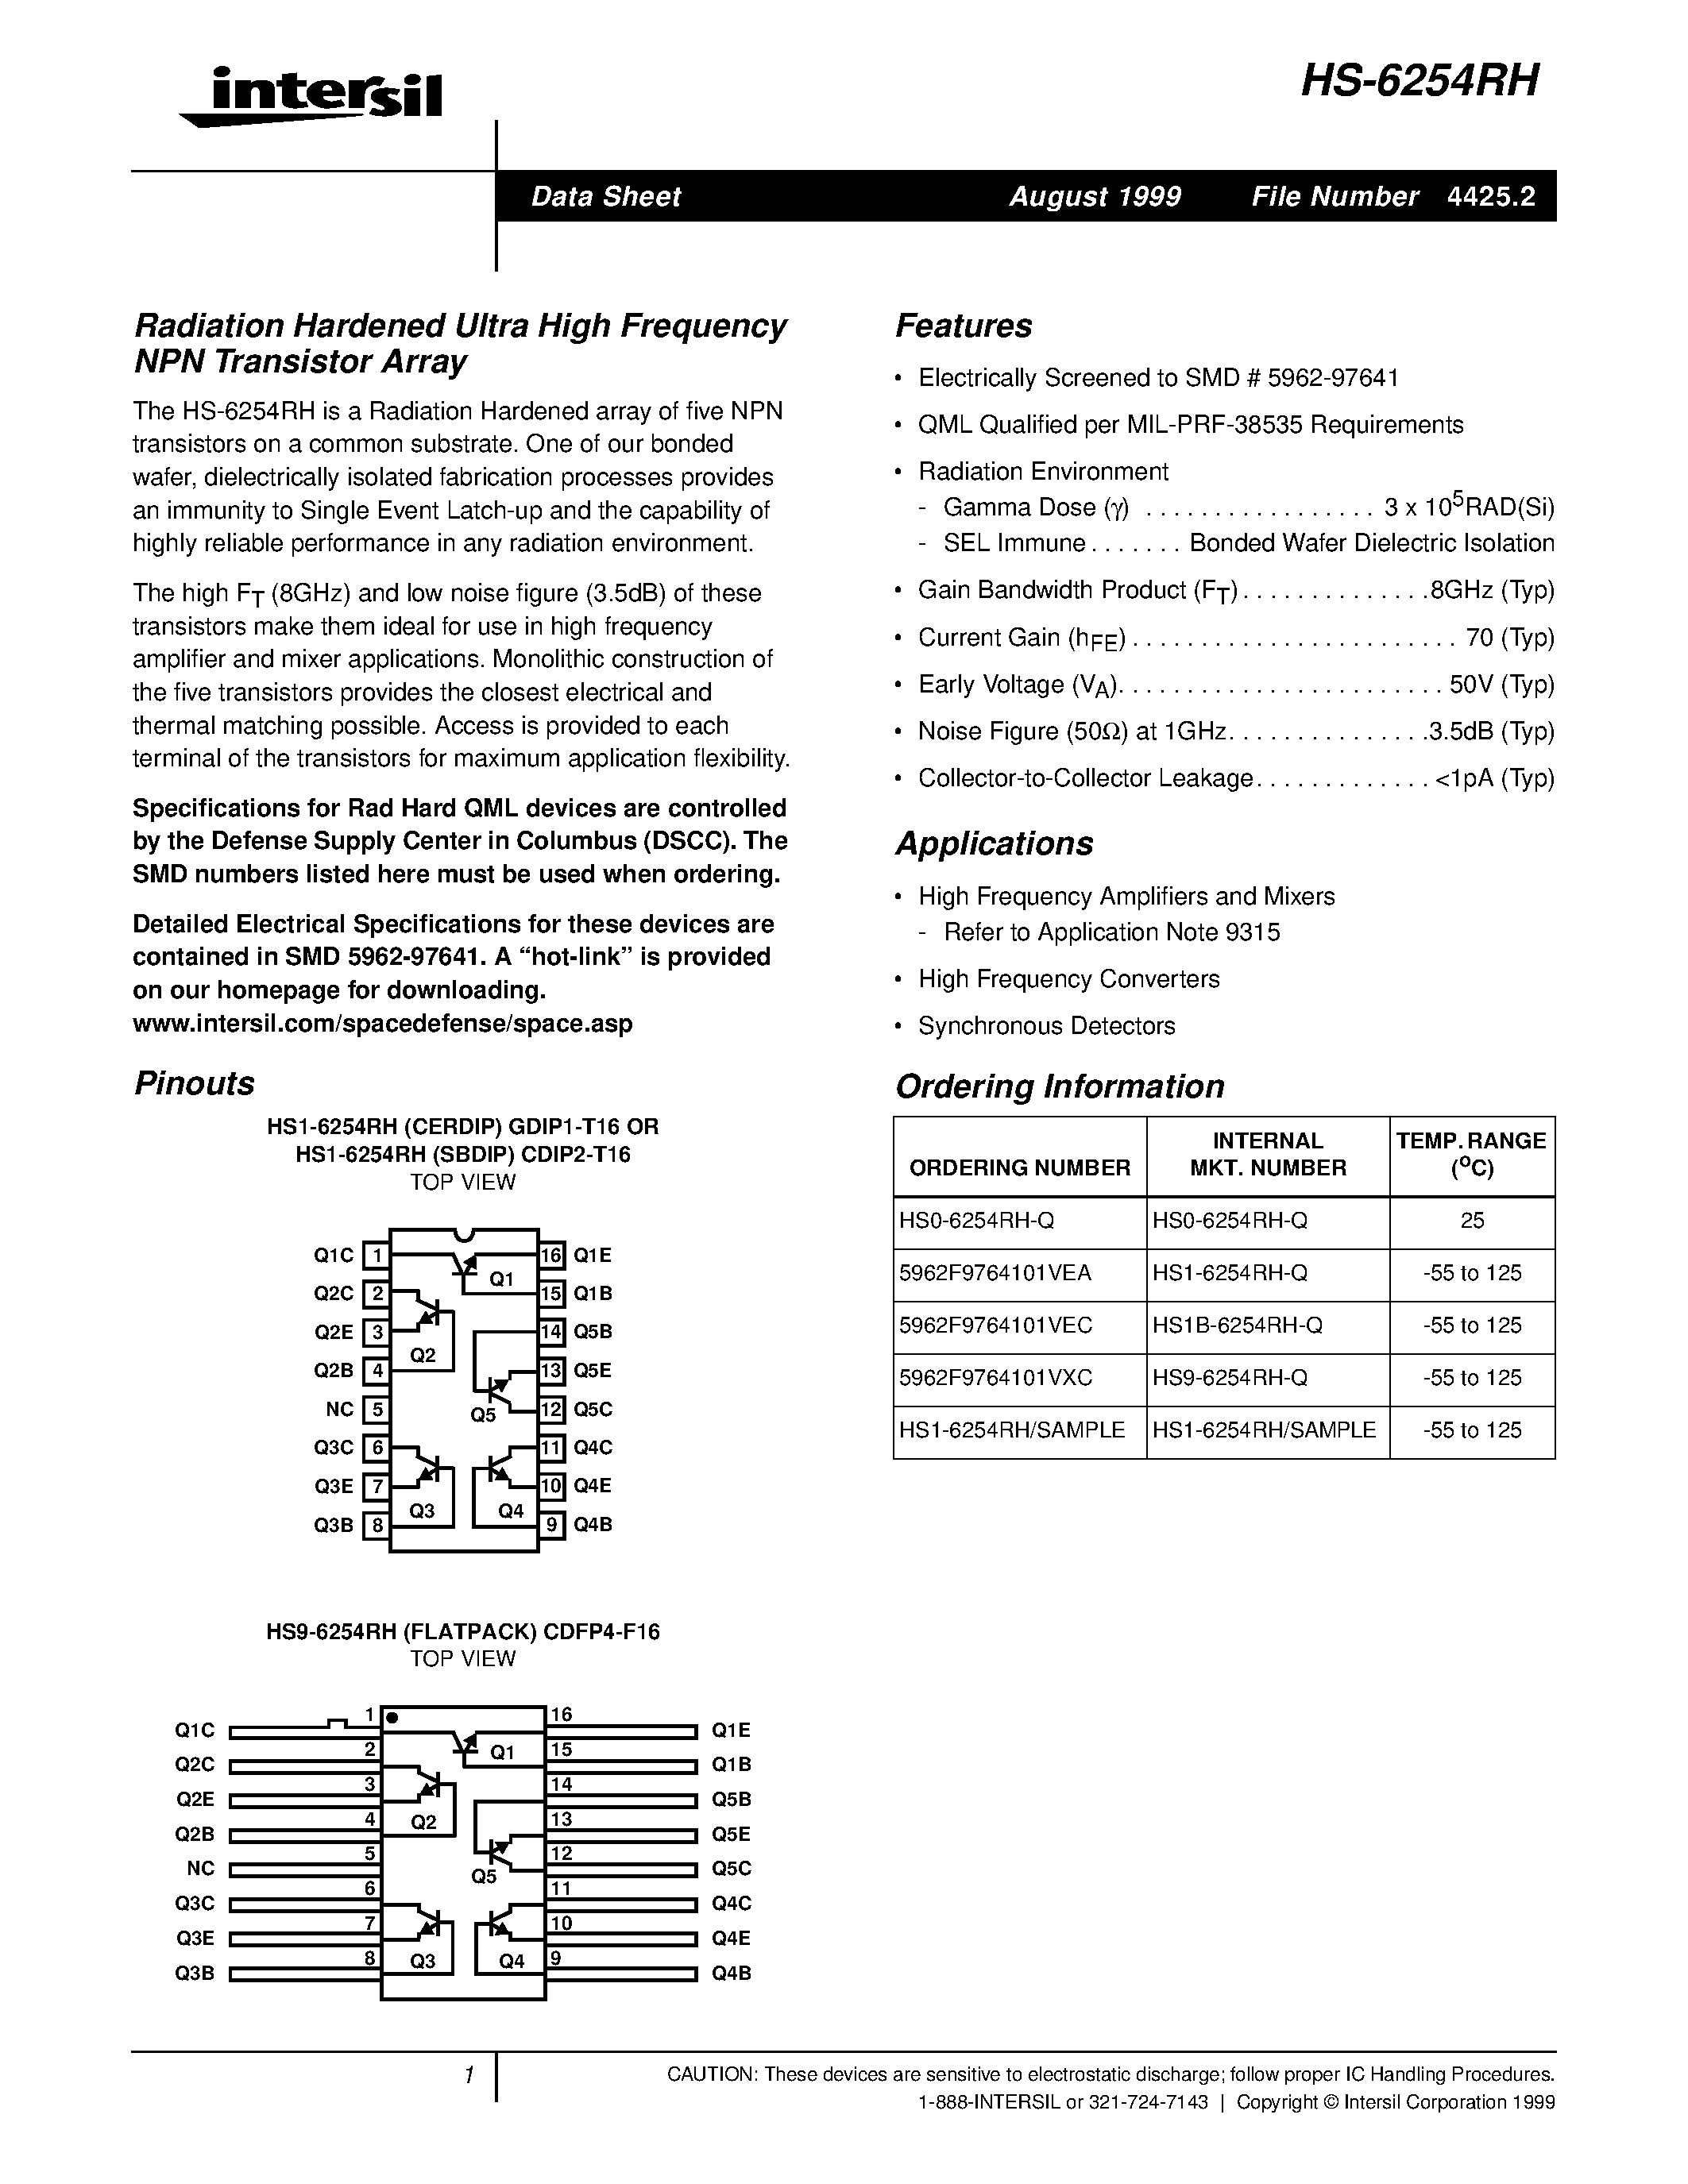 Даташит HS1-6254RH-Q - Radiation Hardened Ultra High Frequency NPN Transistor Array страница 1